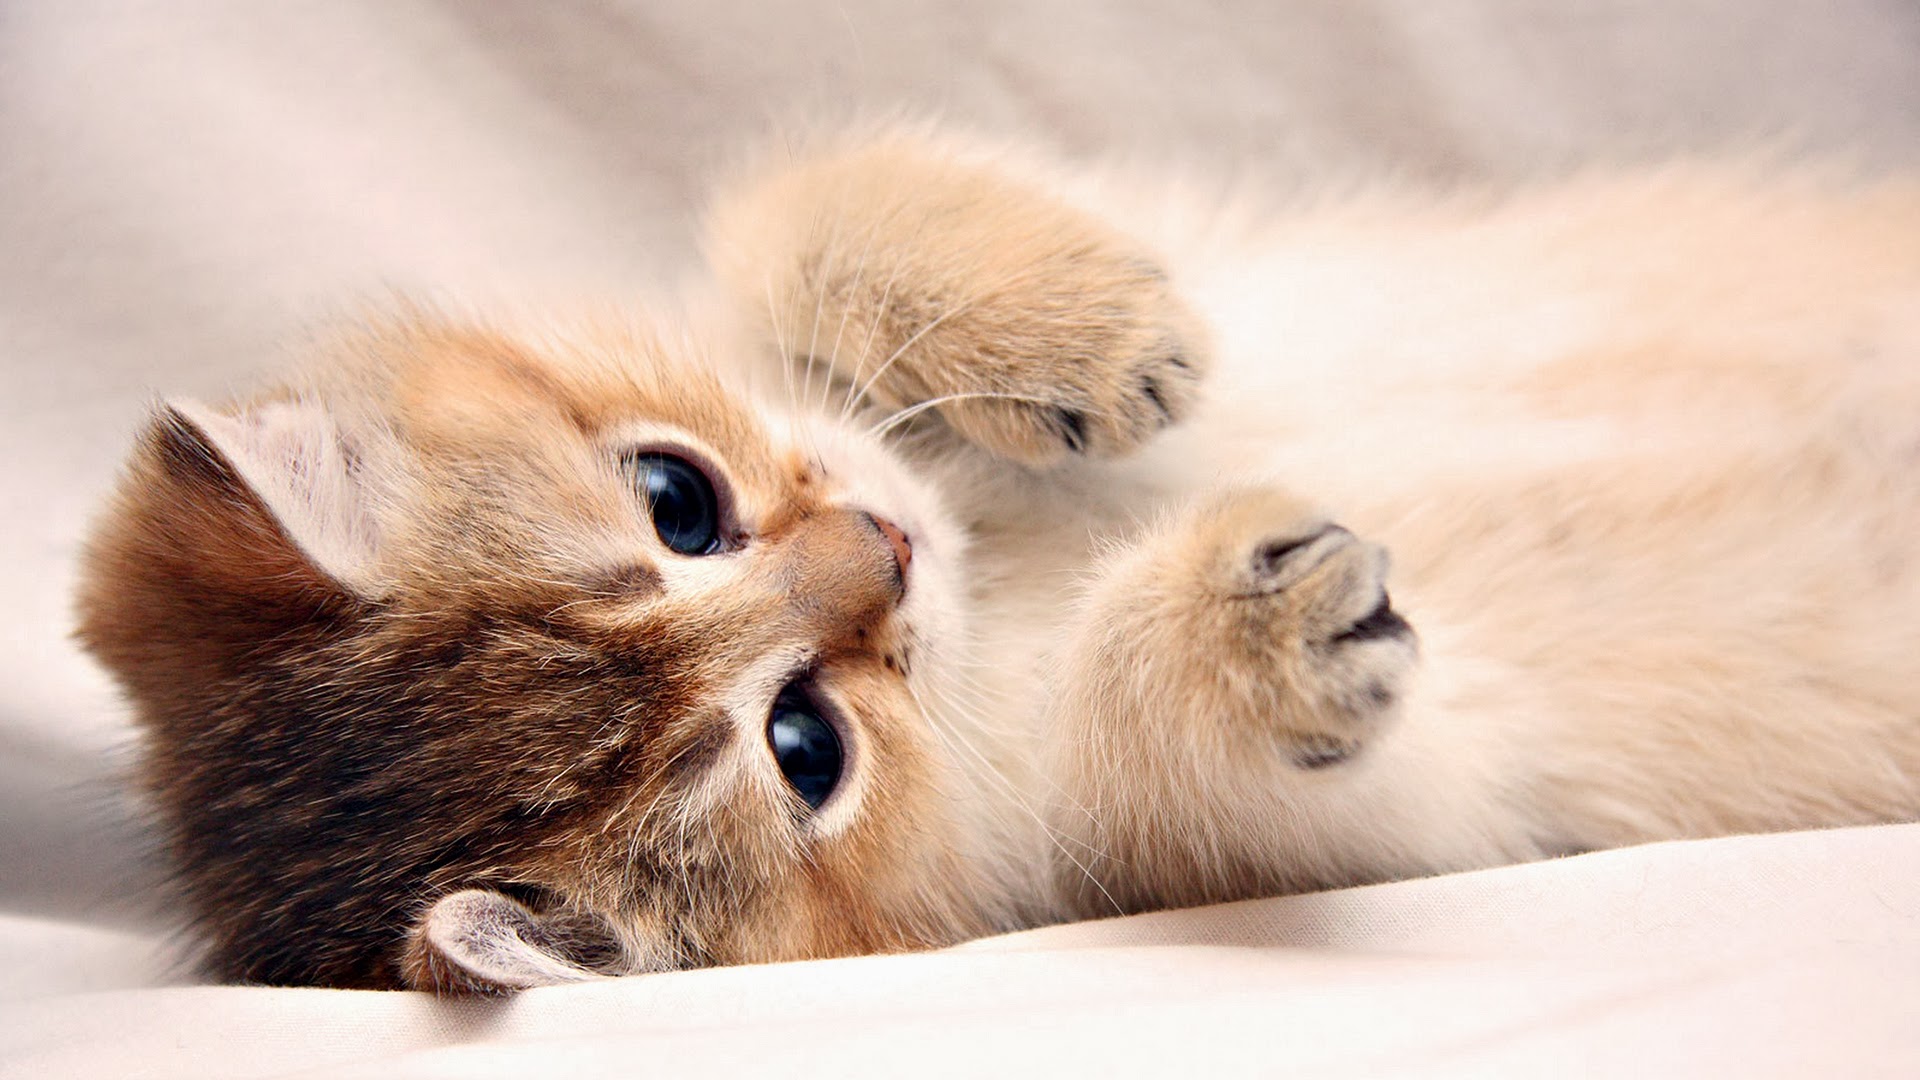 47+] Cute Cats HD Wallpapers - WallpaperSafari